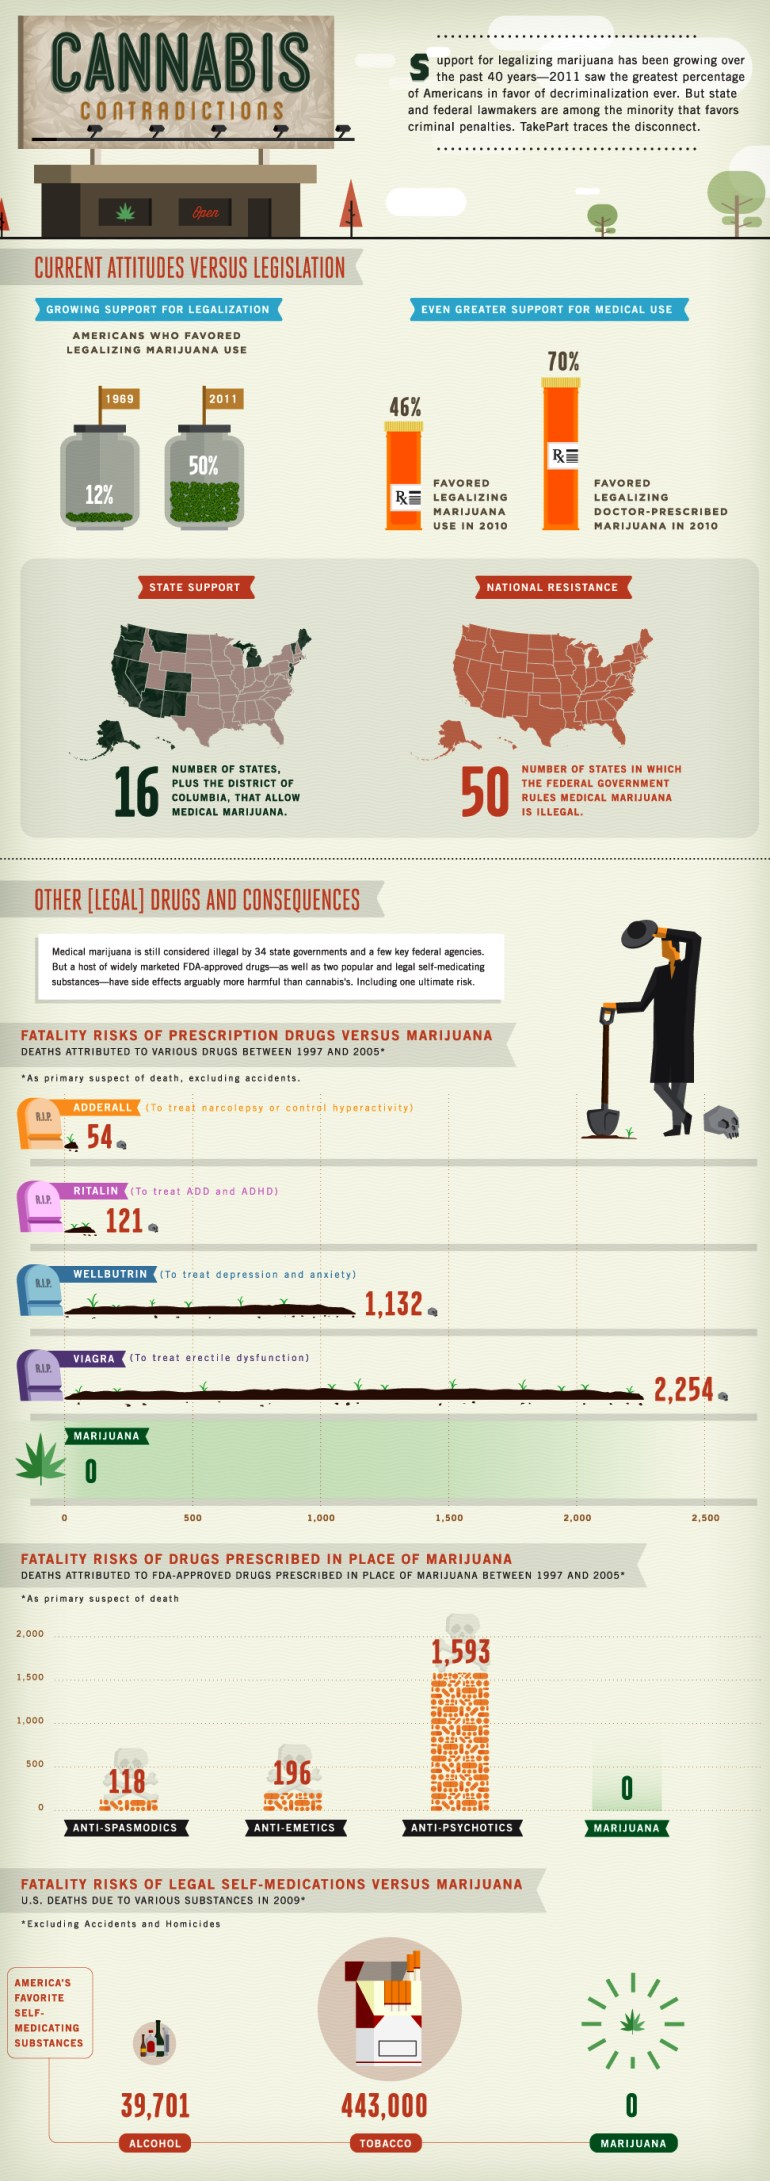 marijuana-public-opinion-laws-infographic